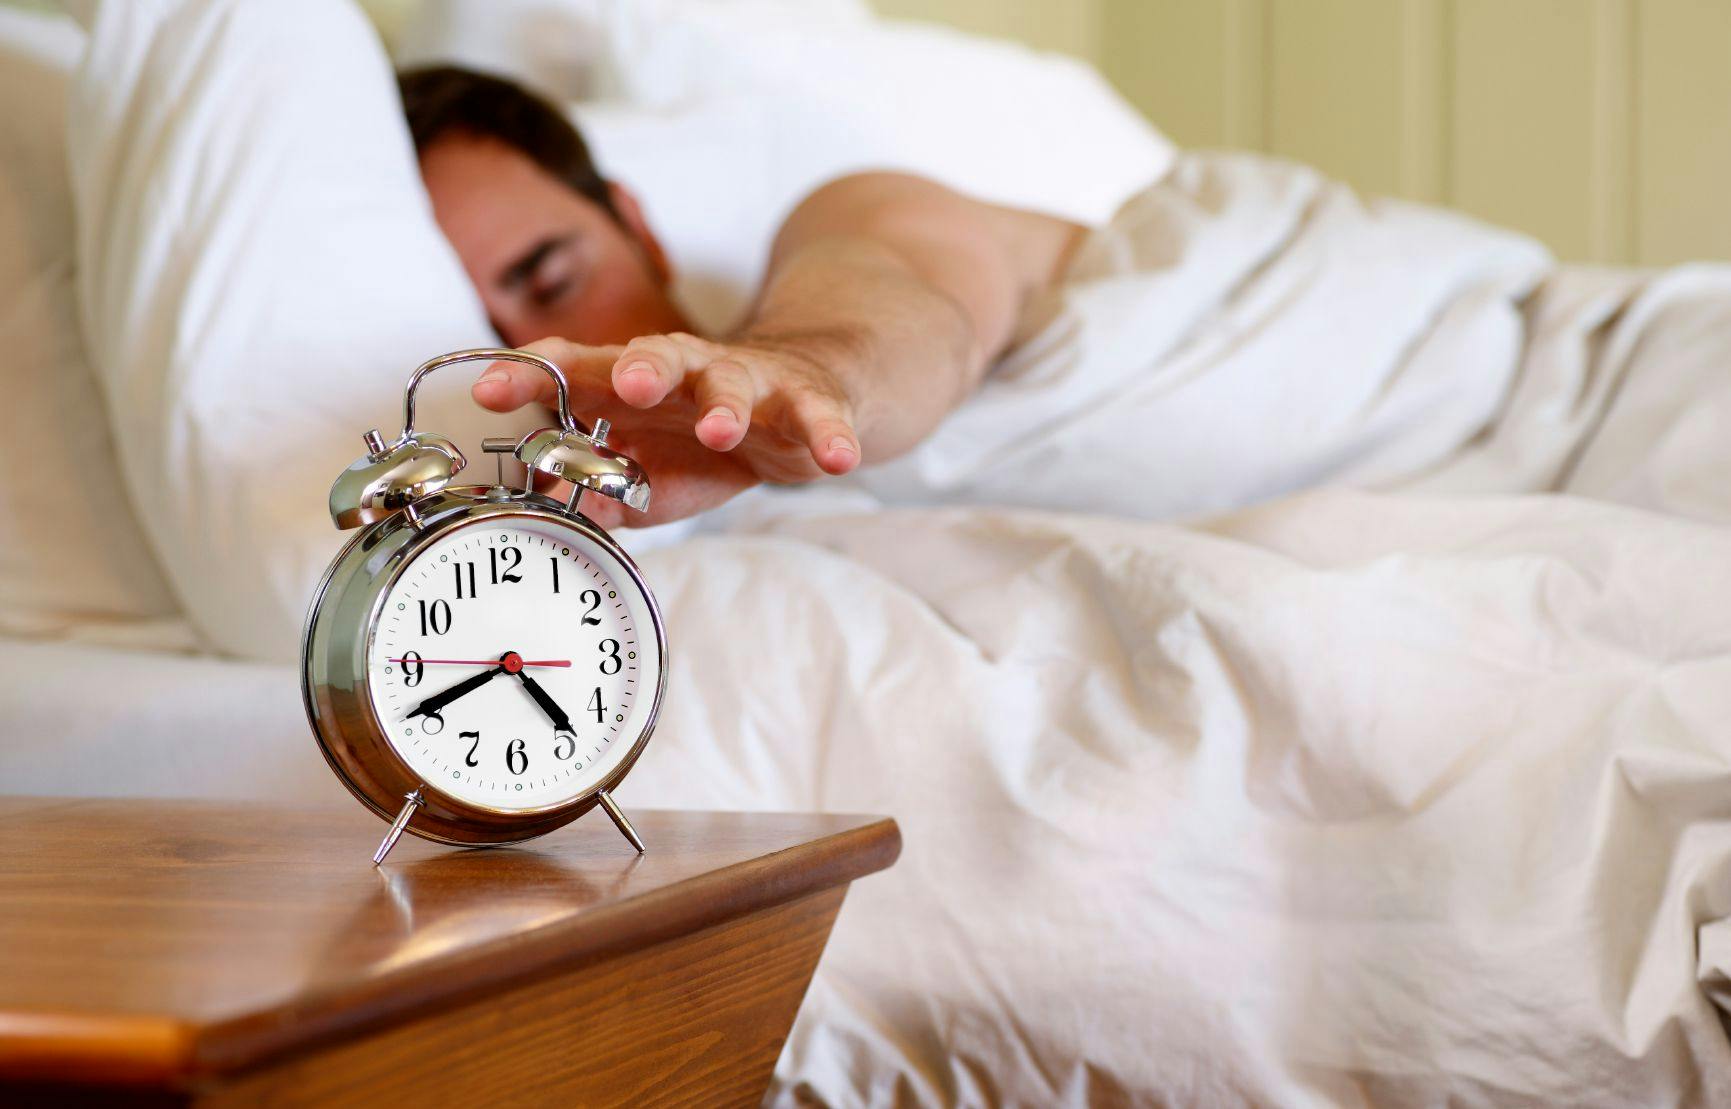 Man sleeping reaching for alarm clock